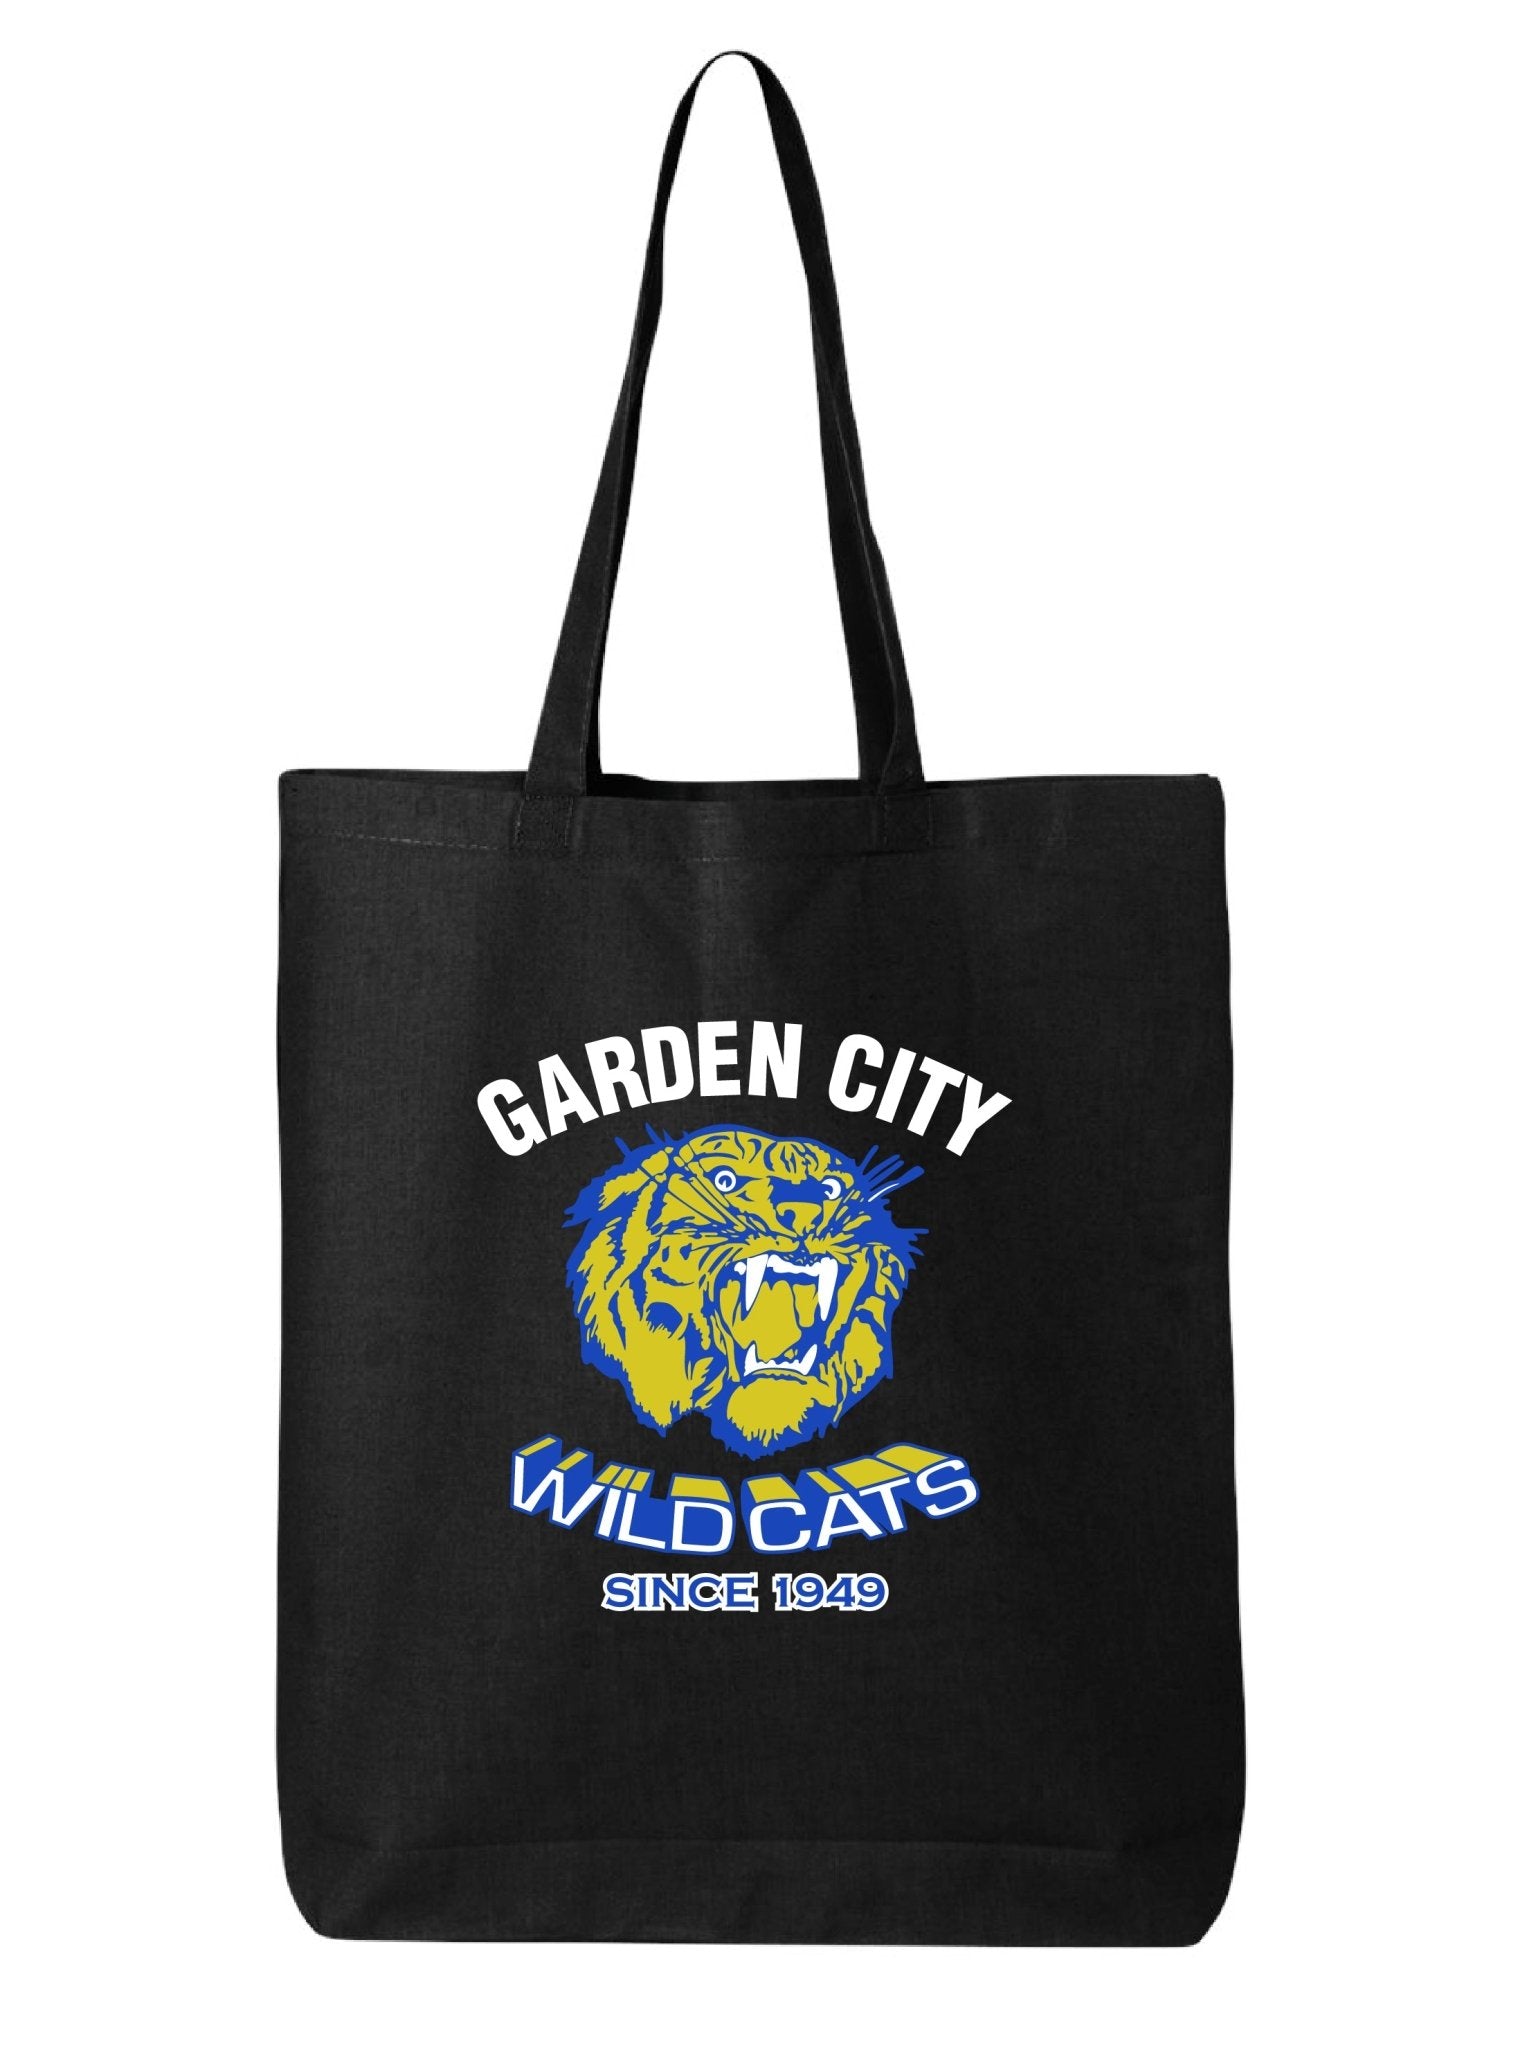 Garden City Wildcats Since 1949 Tote Bag - Oddball Workshop